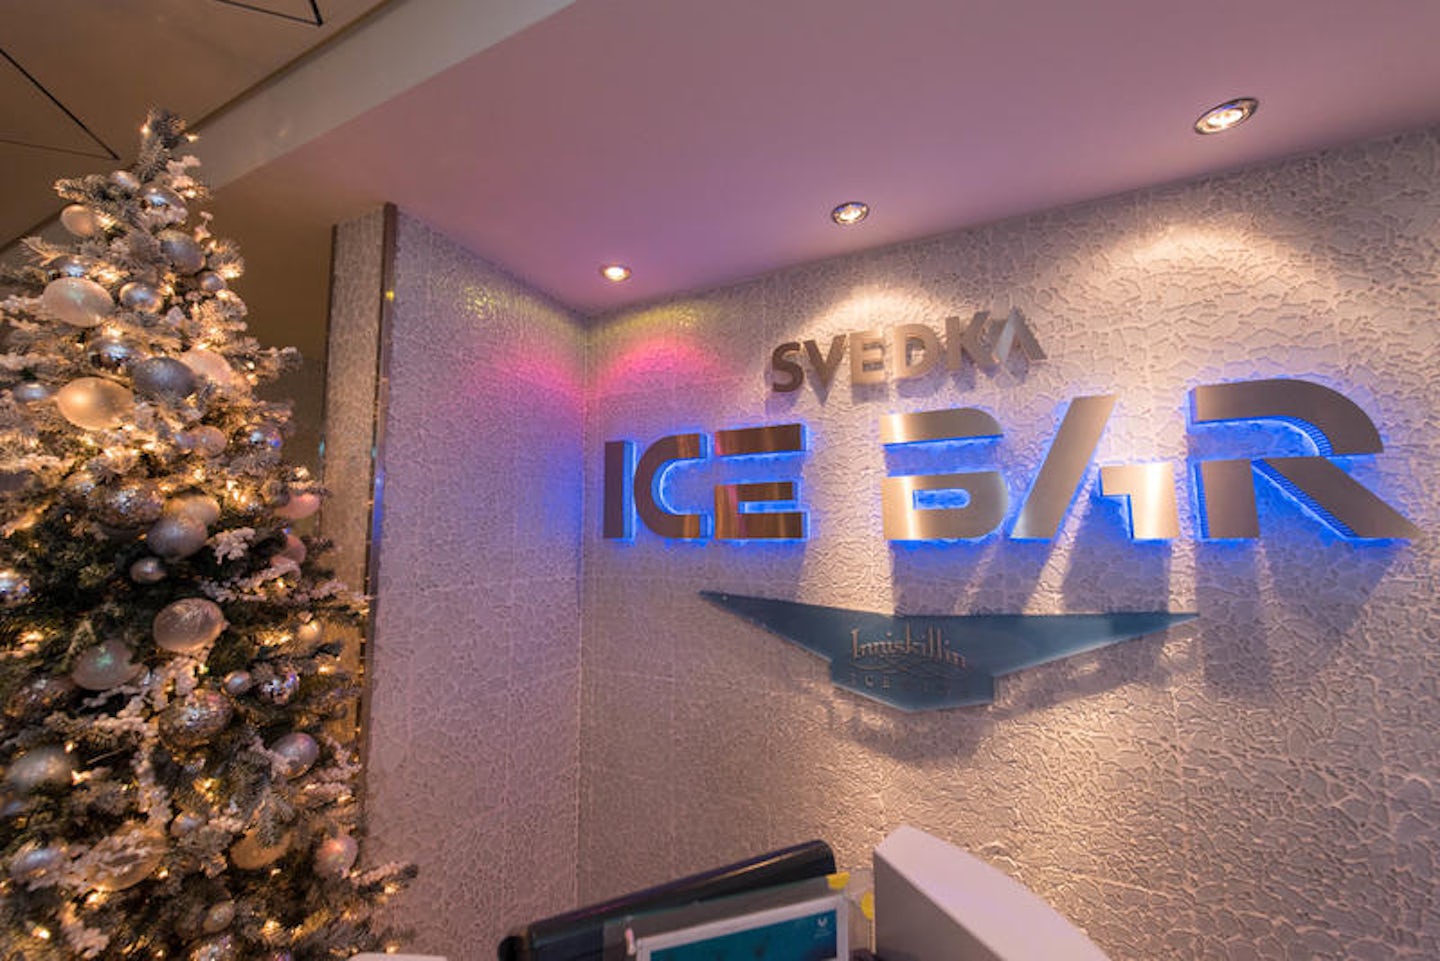 Svedka Ice Bar on Norwegian Breakaway